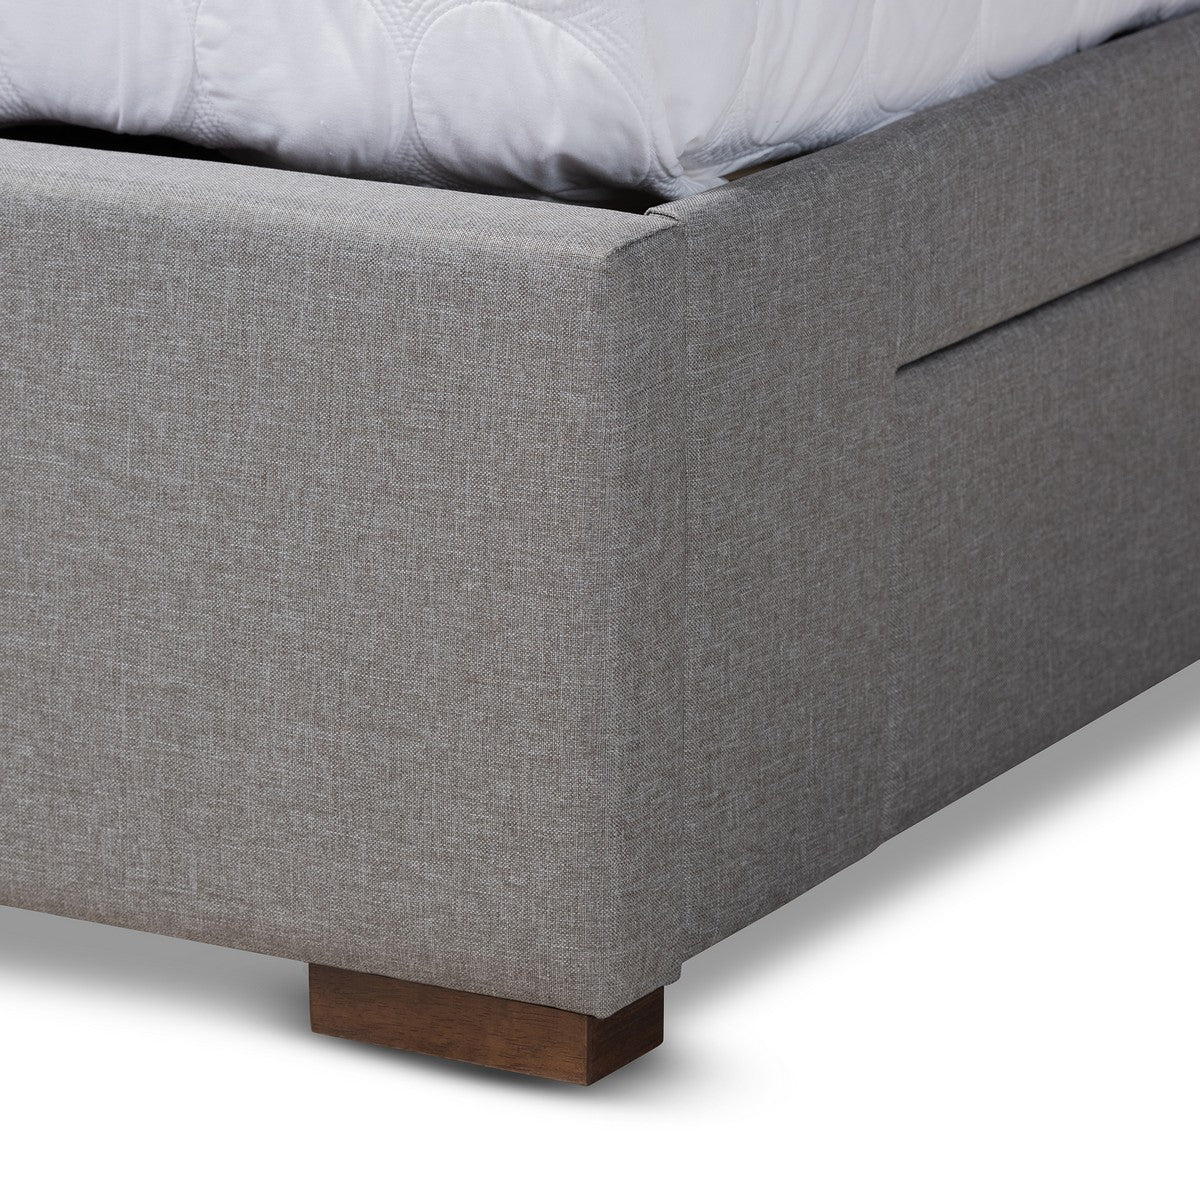 Baxton Studio Leni Modern and Contemporary Light Grey Fabric Upholstered 4-Drawer King Size Platform Storage Bed Frame